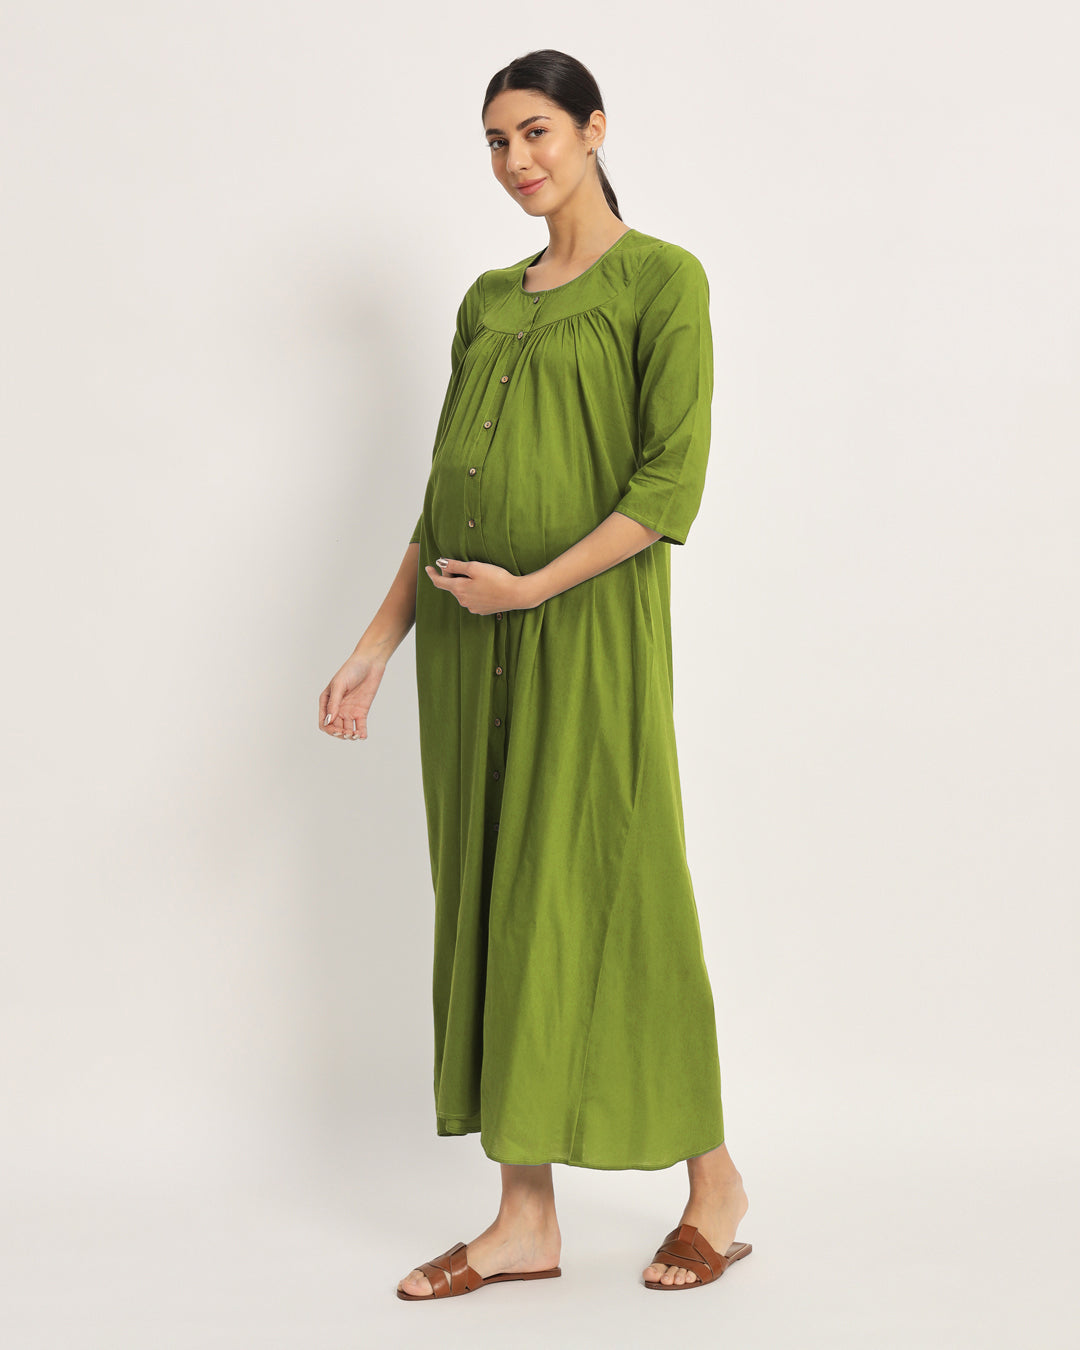 Combo: Iris Pink & Sage Green Mommy Glow Maternity & Nursing Dress